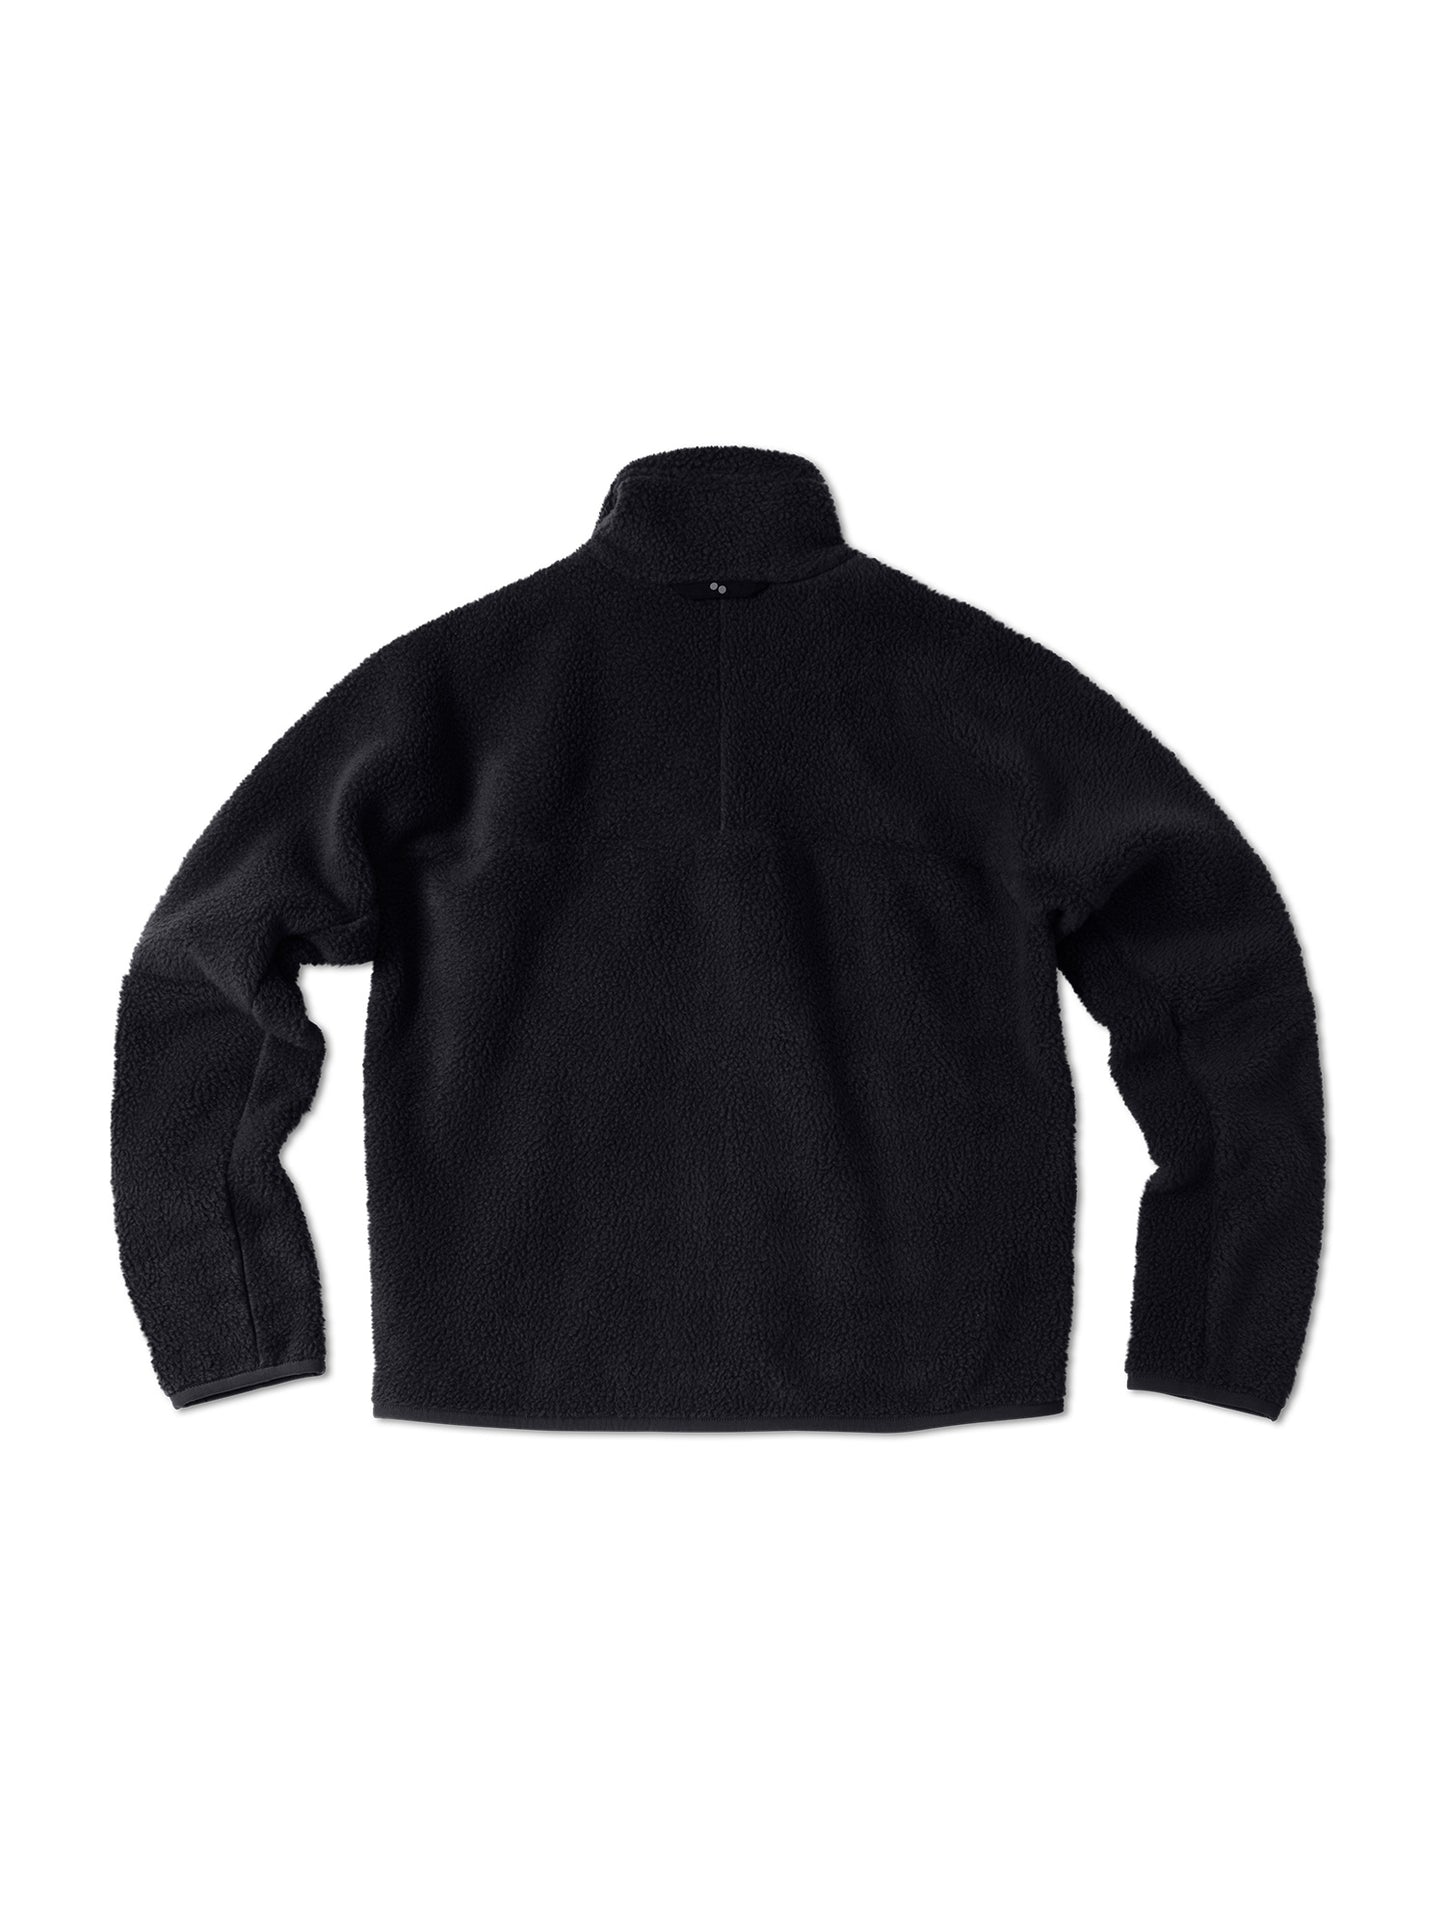 pinqponq-Fleece-Jacket-Women-Peat-Black-back